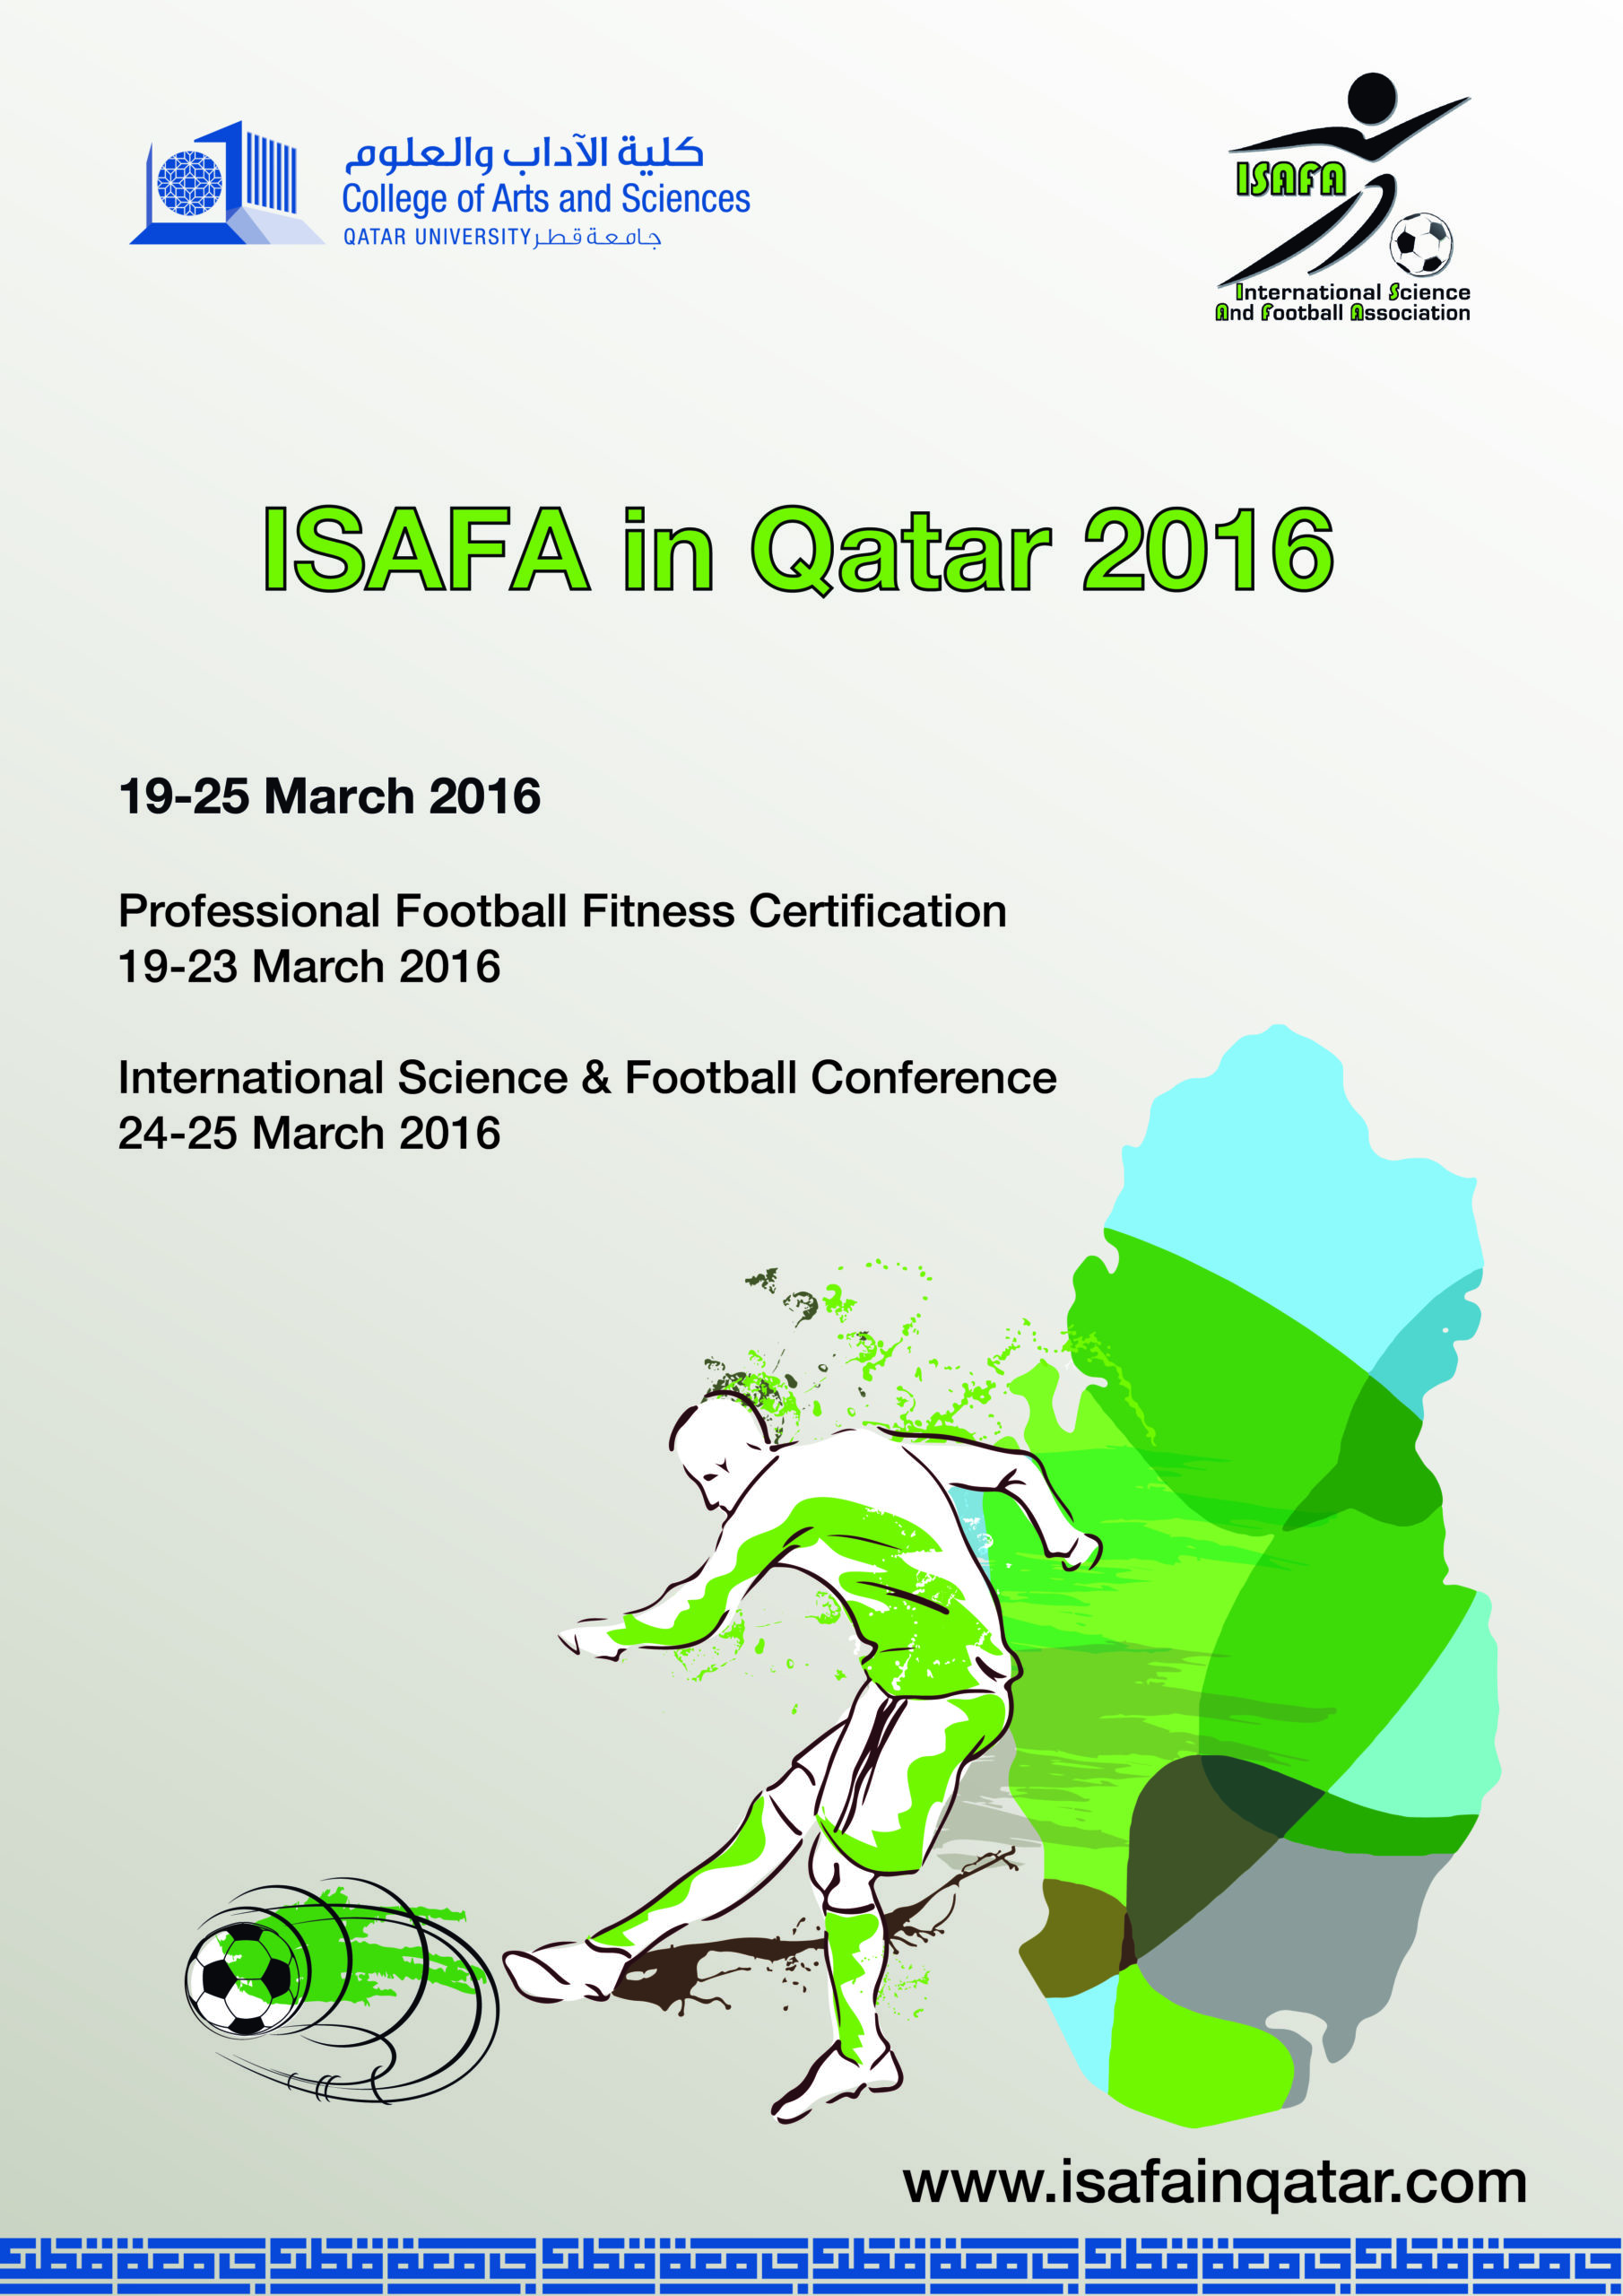 ISAFA 2016 @ Qatar